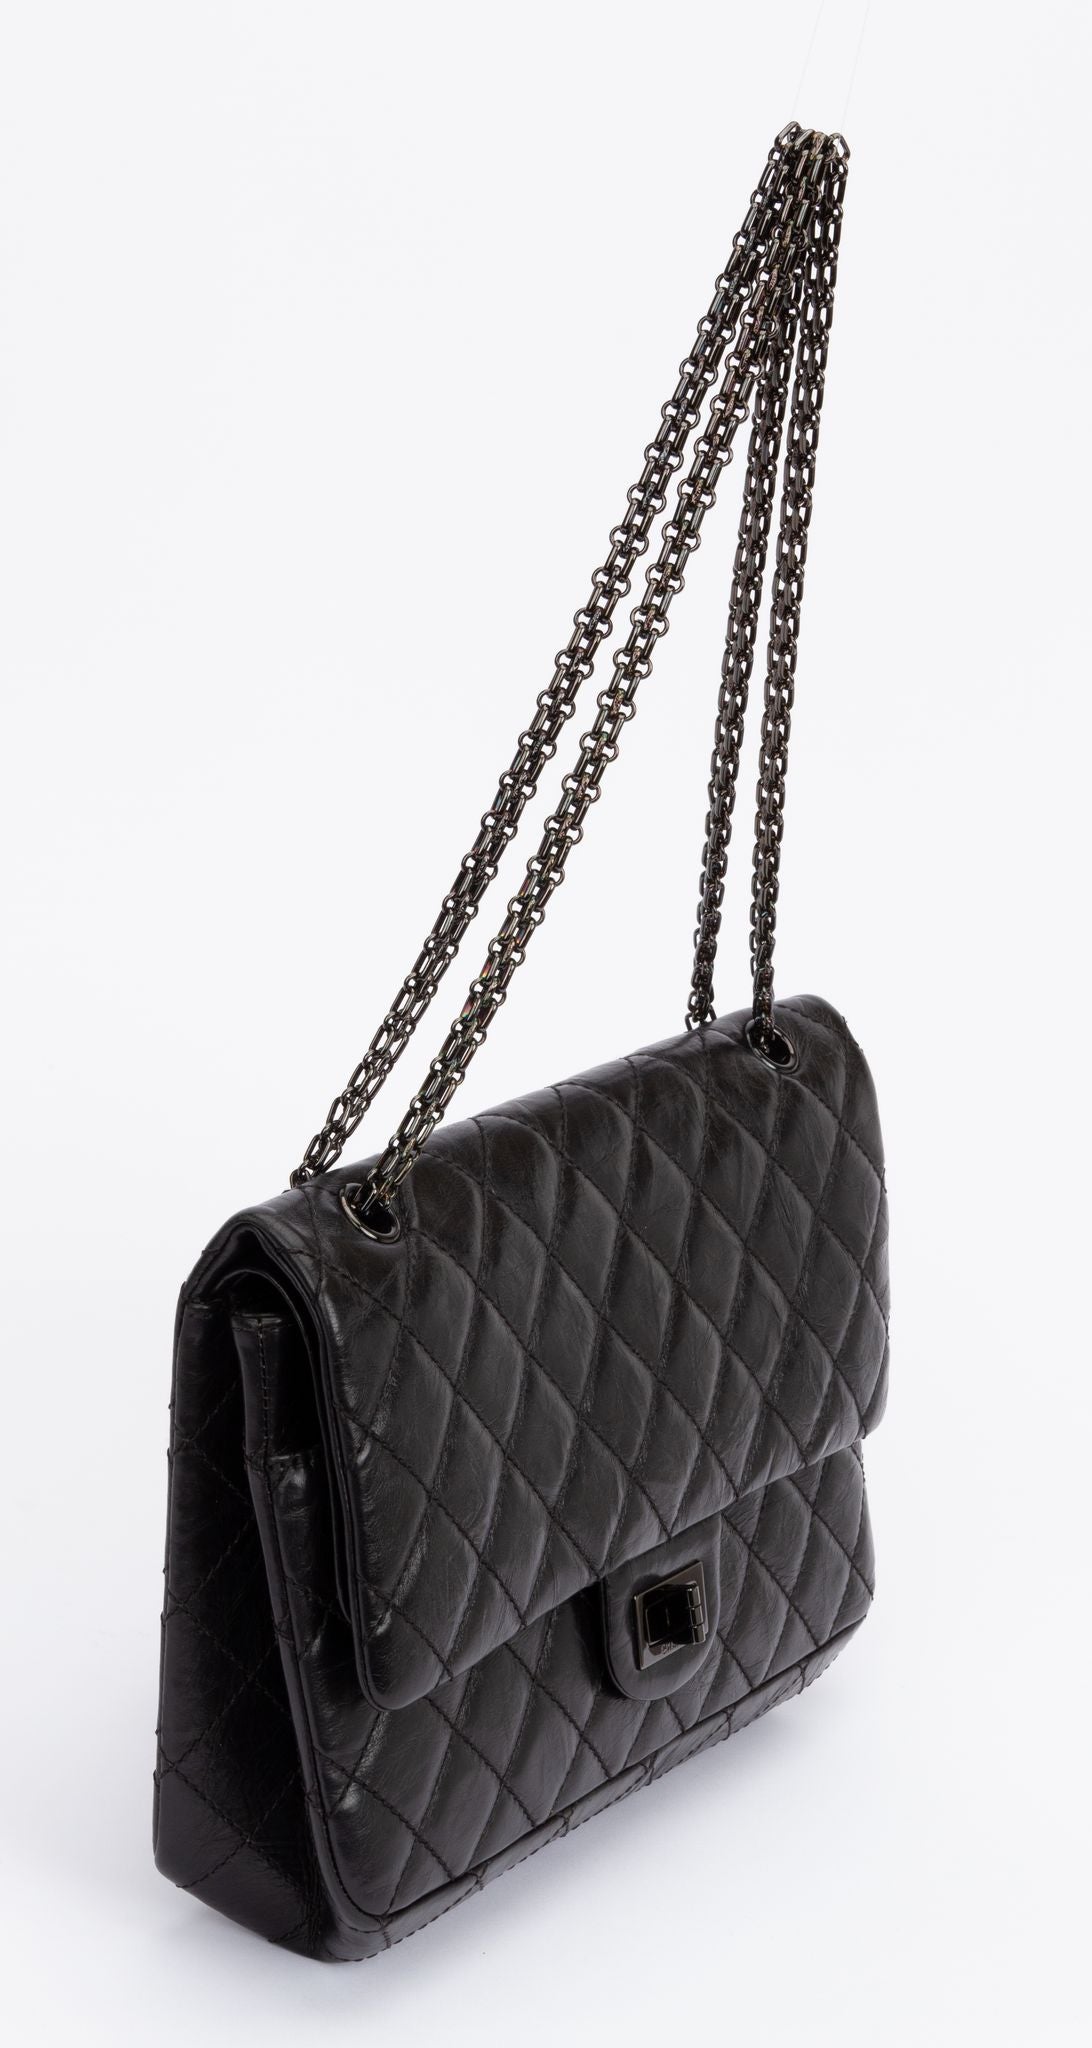 Fashion « Chanel-Vuitton », Sale n°2089, Lot n°4